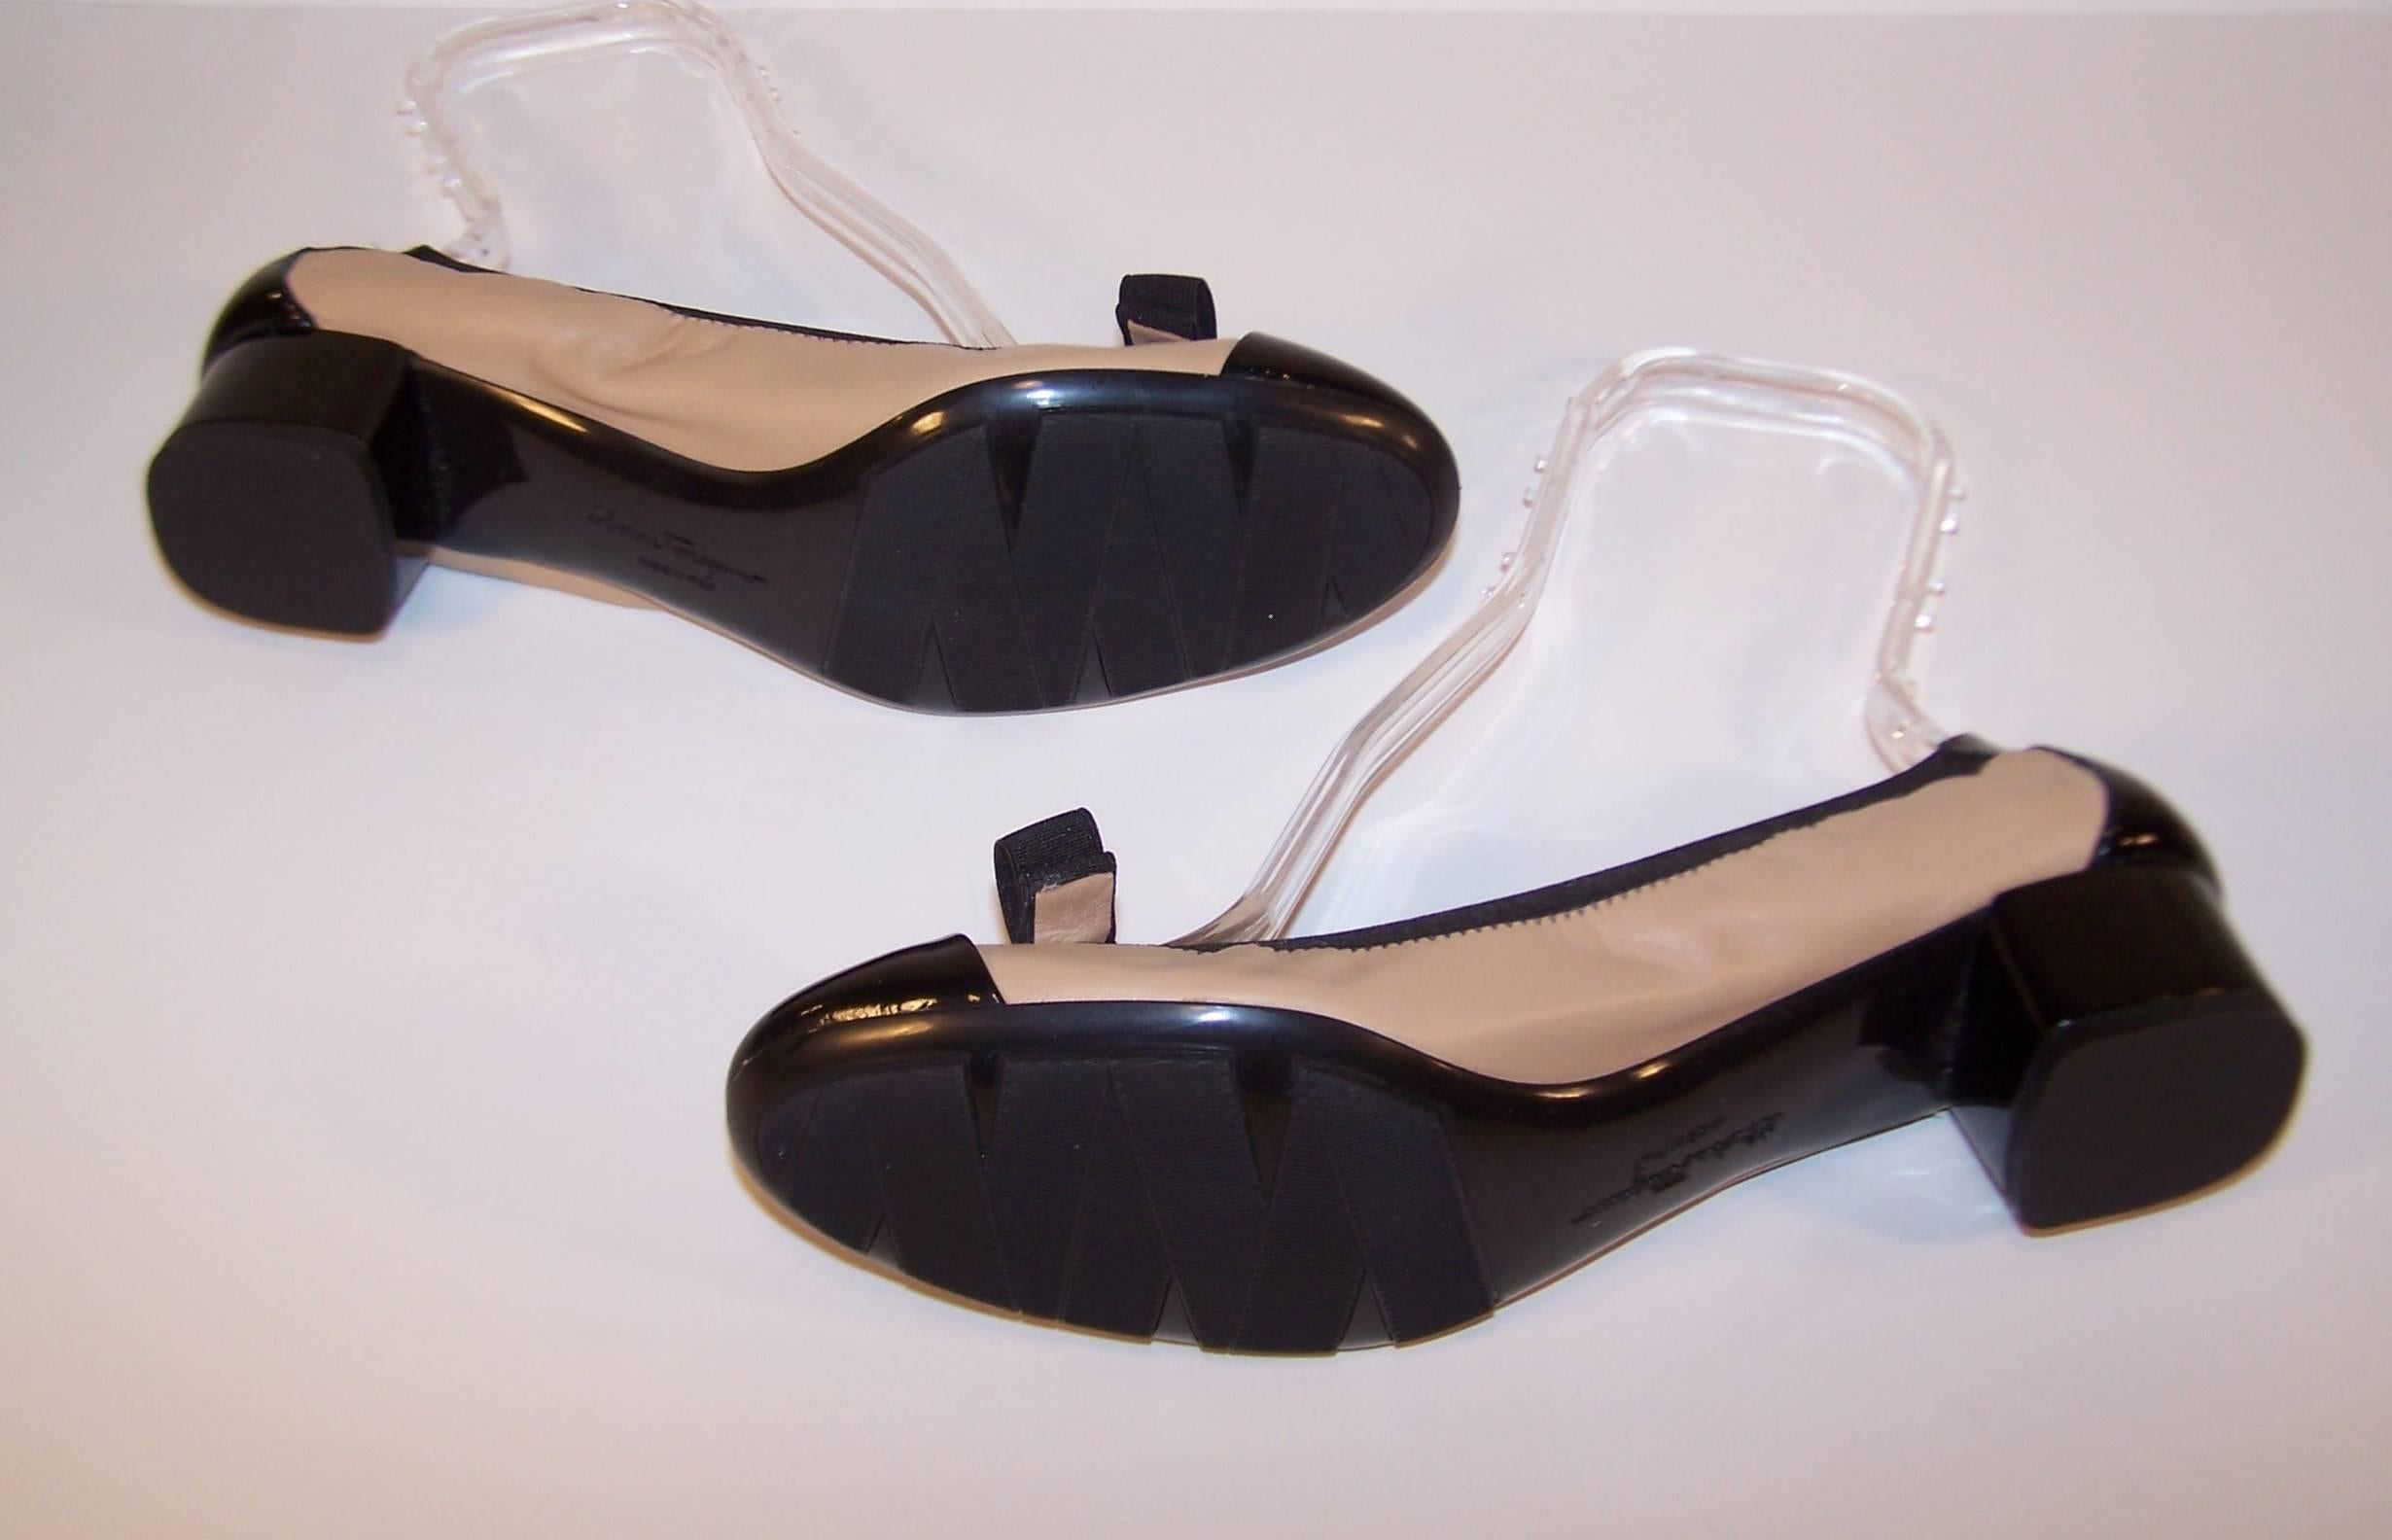 New In Box Ferragamo 'My Paris' Ballerina Shoes Size 8 1